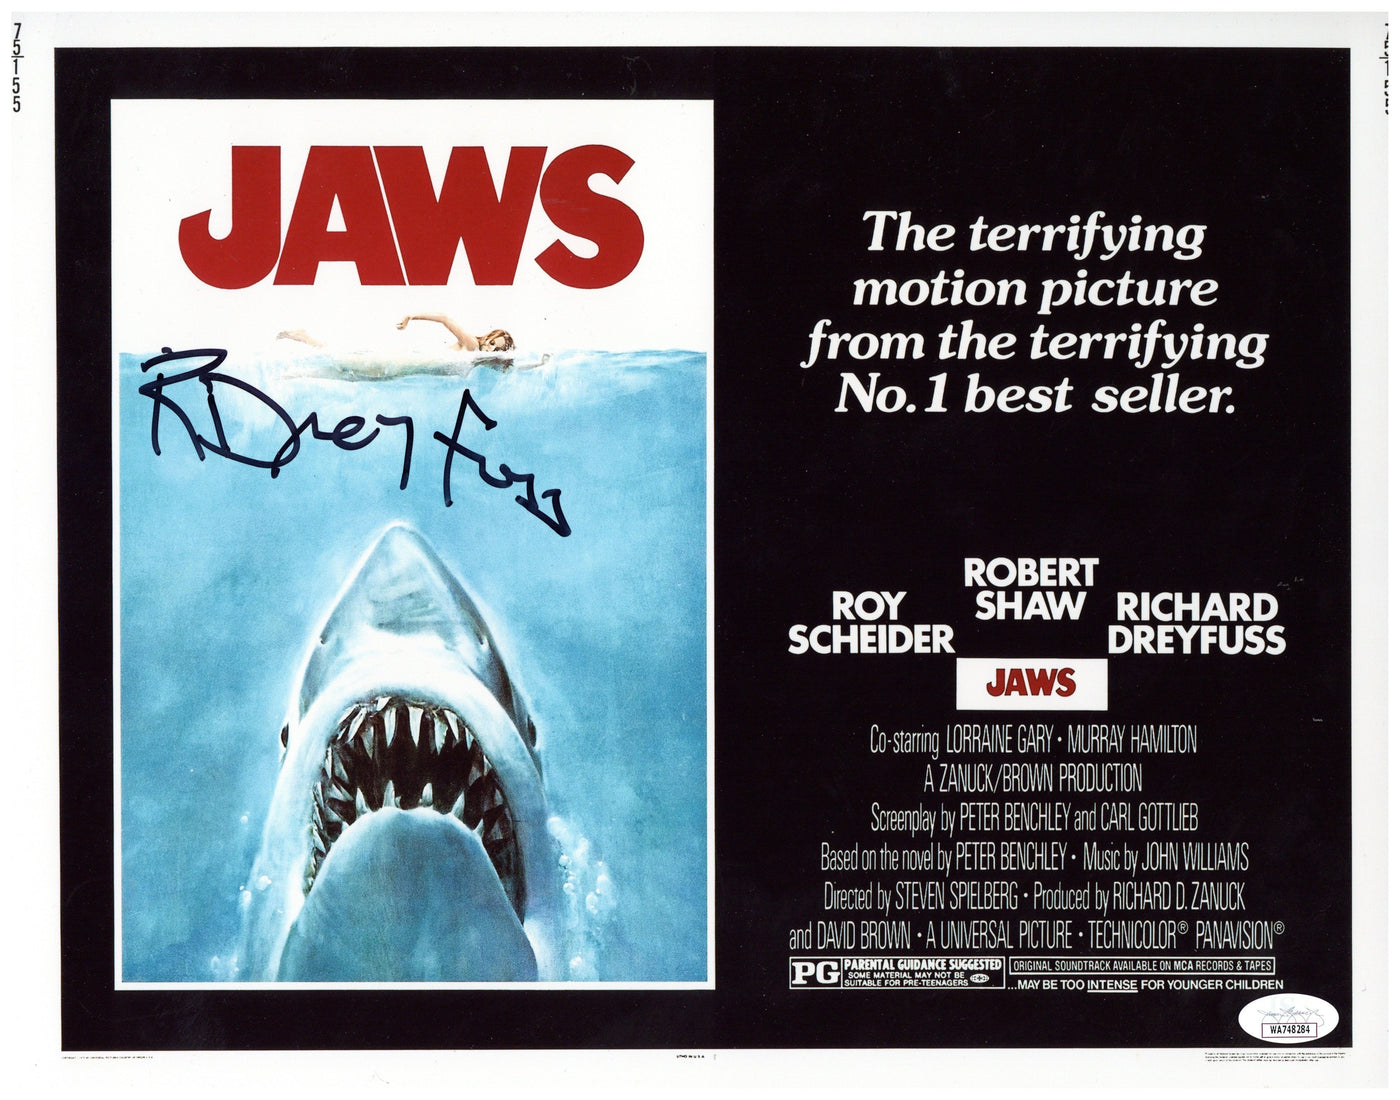 Richard Dreyfuss Autograph Signed 11x14 Photo JAWS Authenticated JSA COA